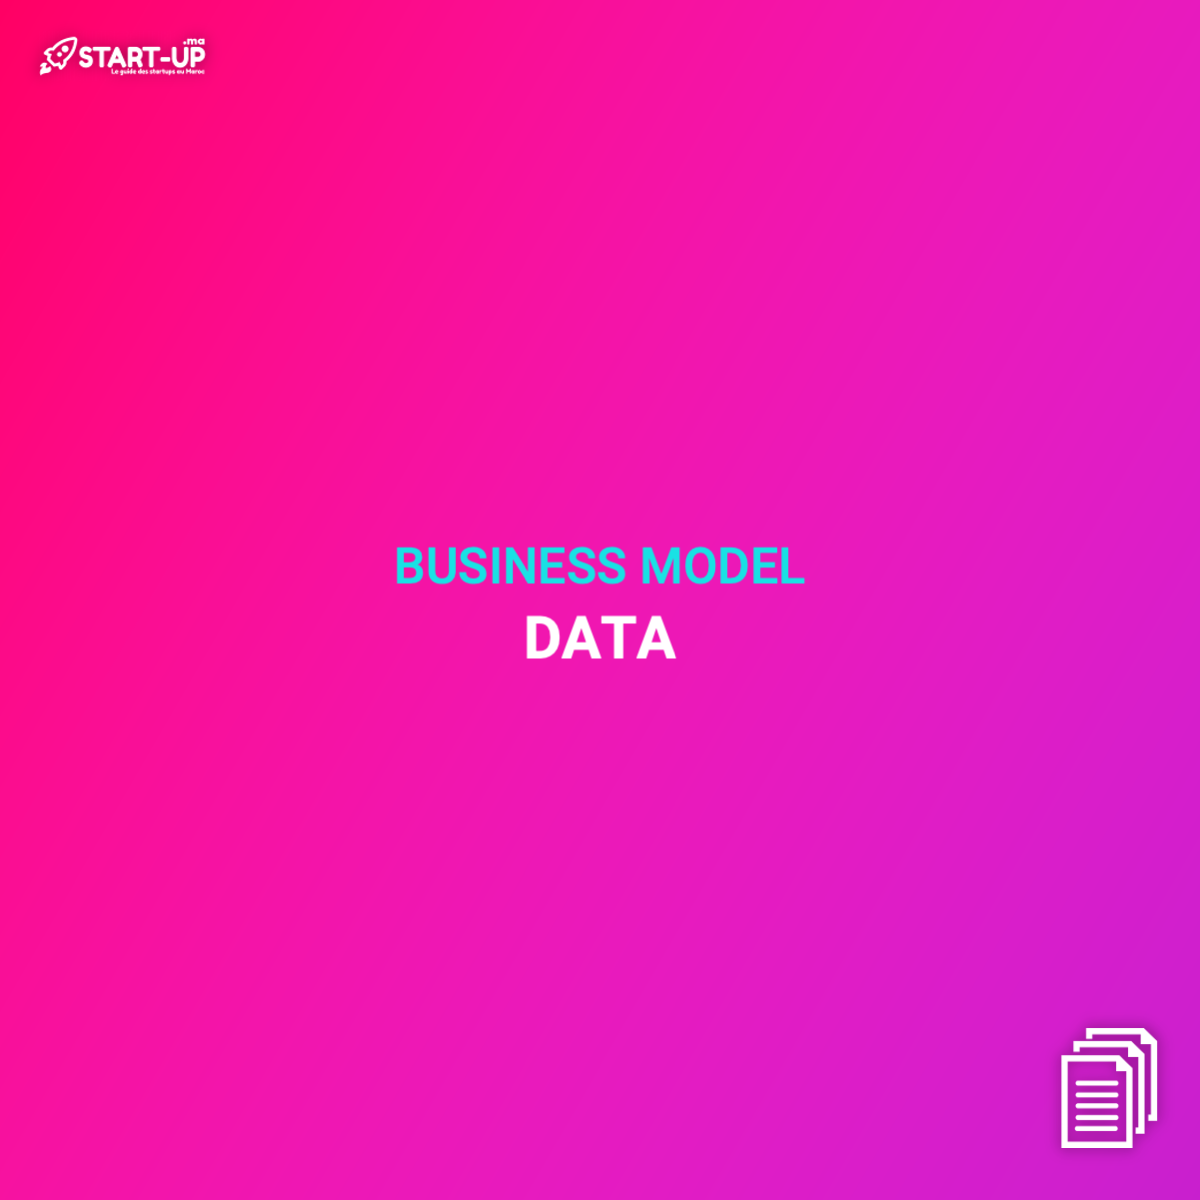 Data as Business Model